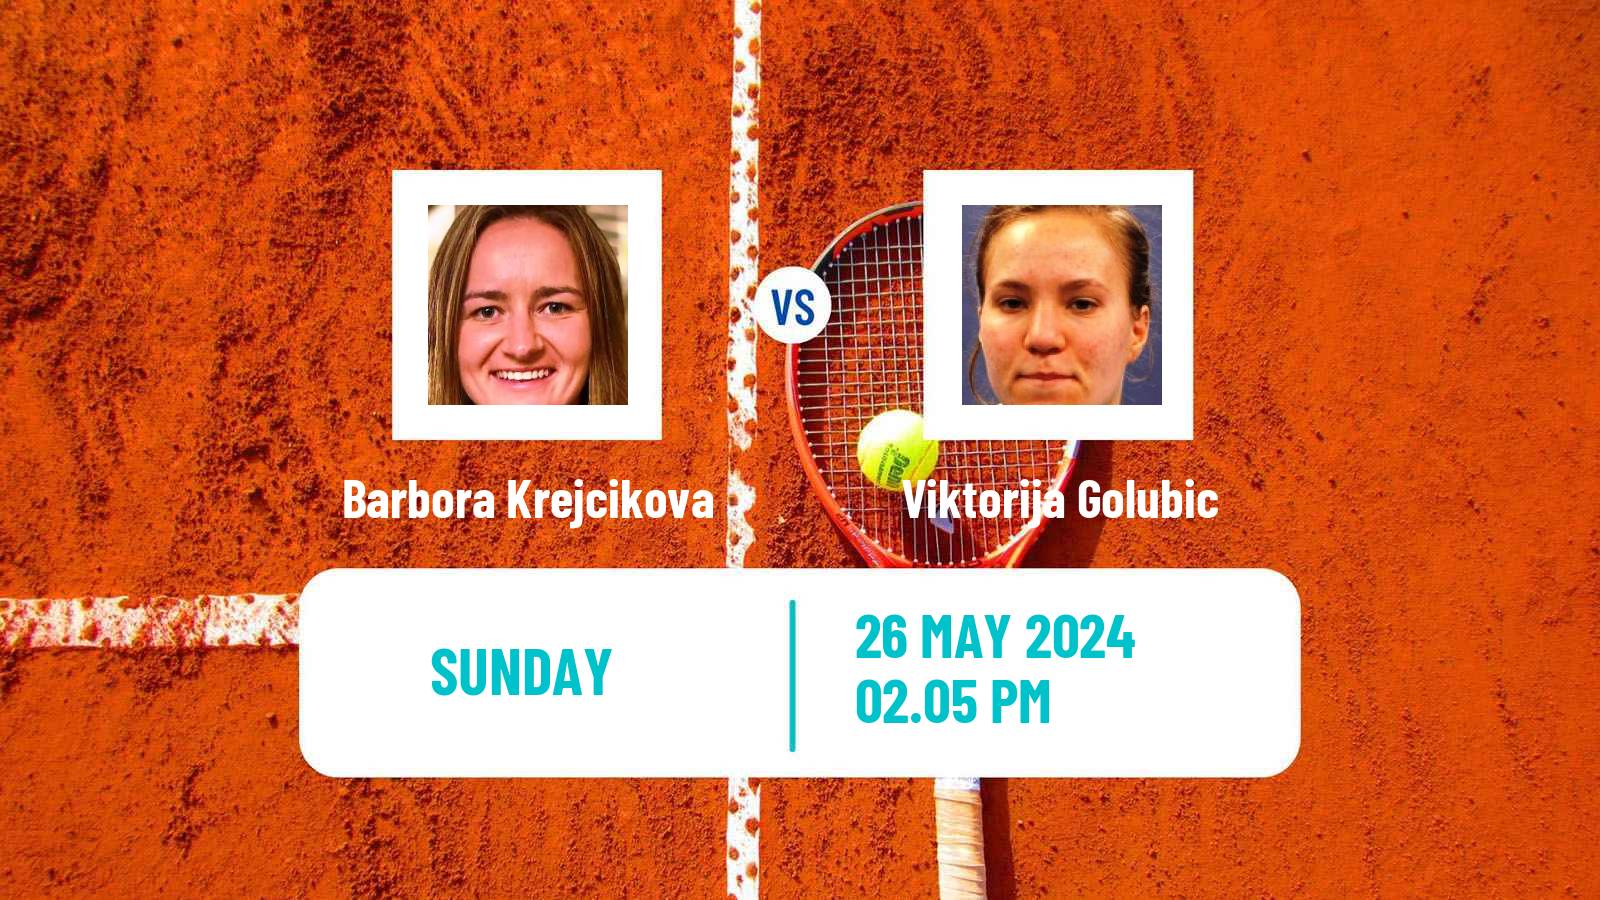 Tennis WTA Roland Garros Barbora Krejcikova - Viktorija Golubic